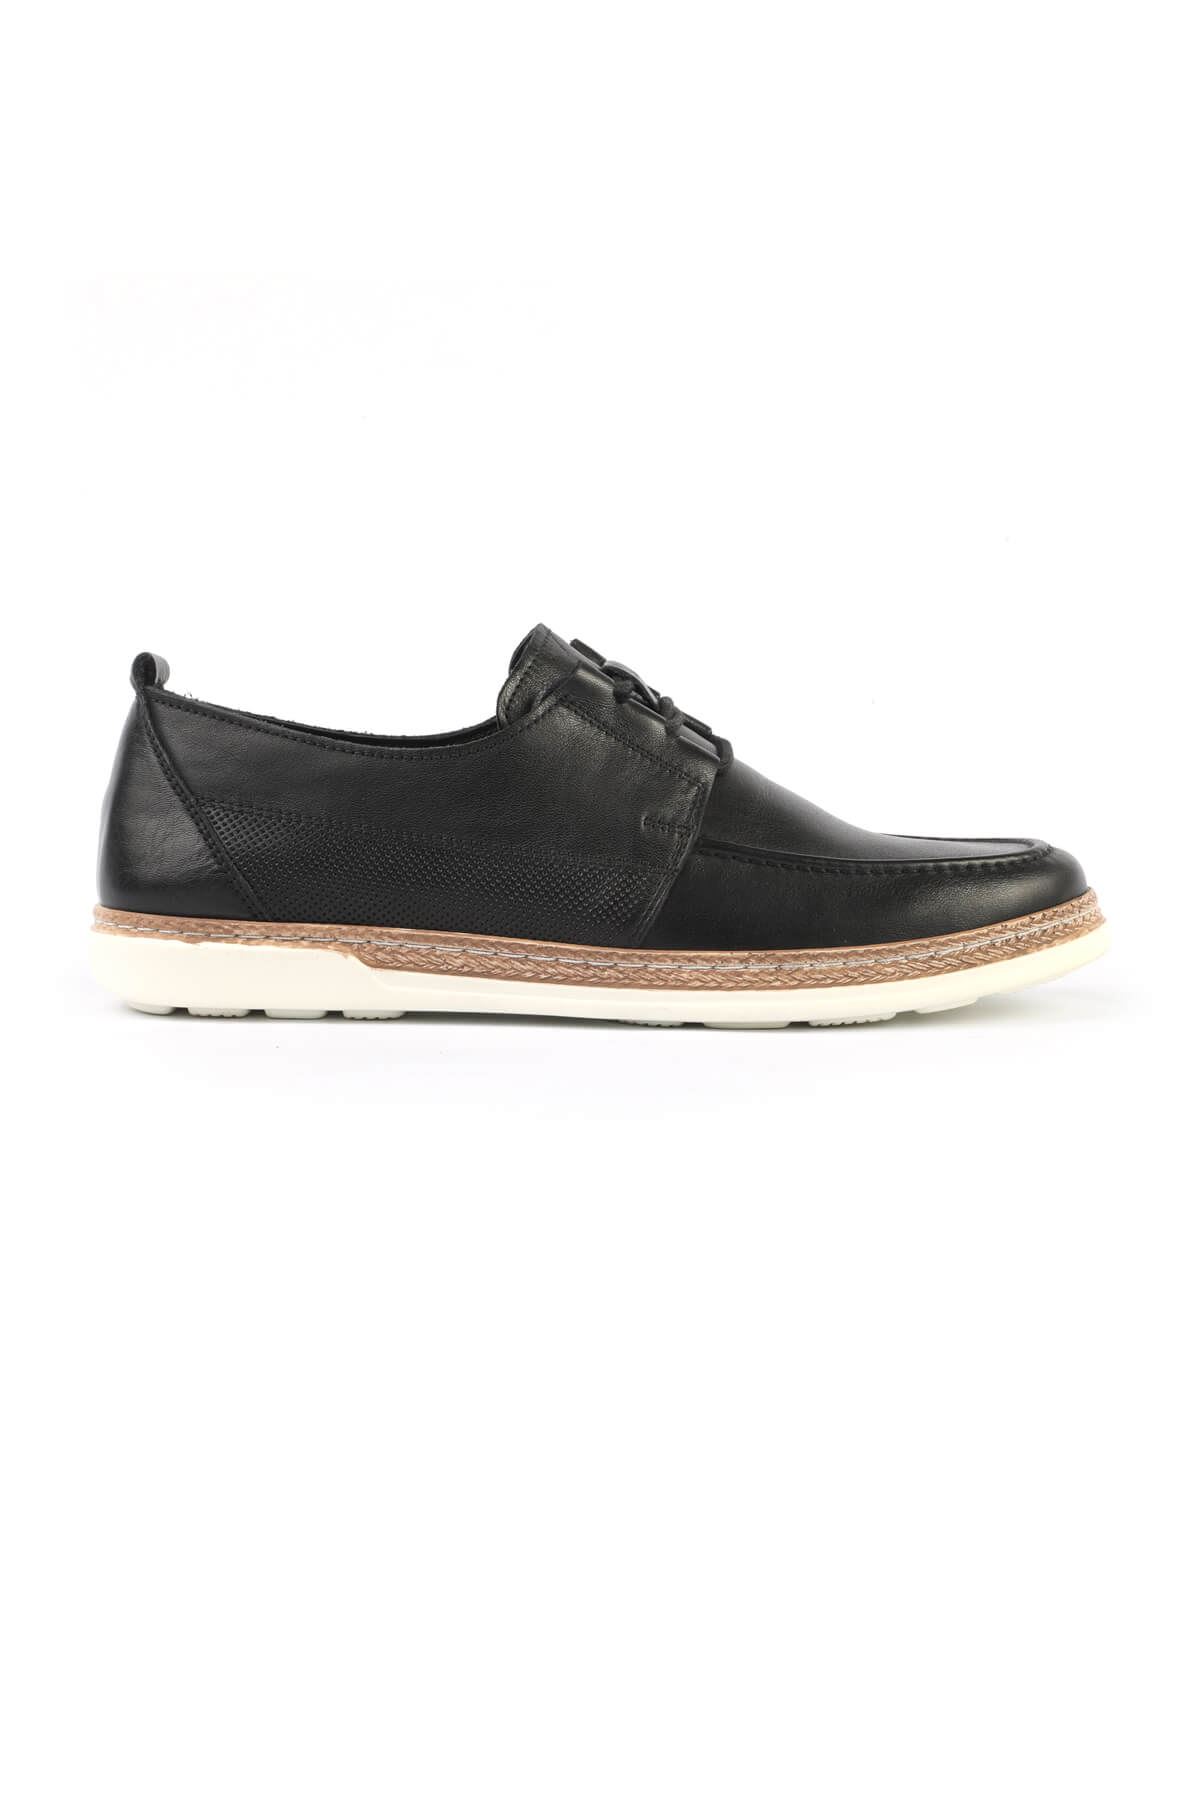 Libero C626 Black Casual Shoes